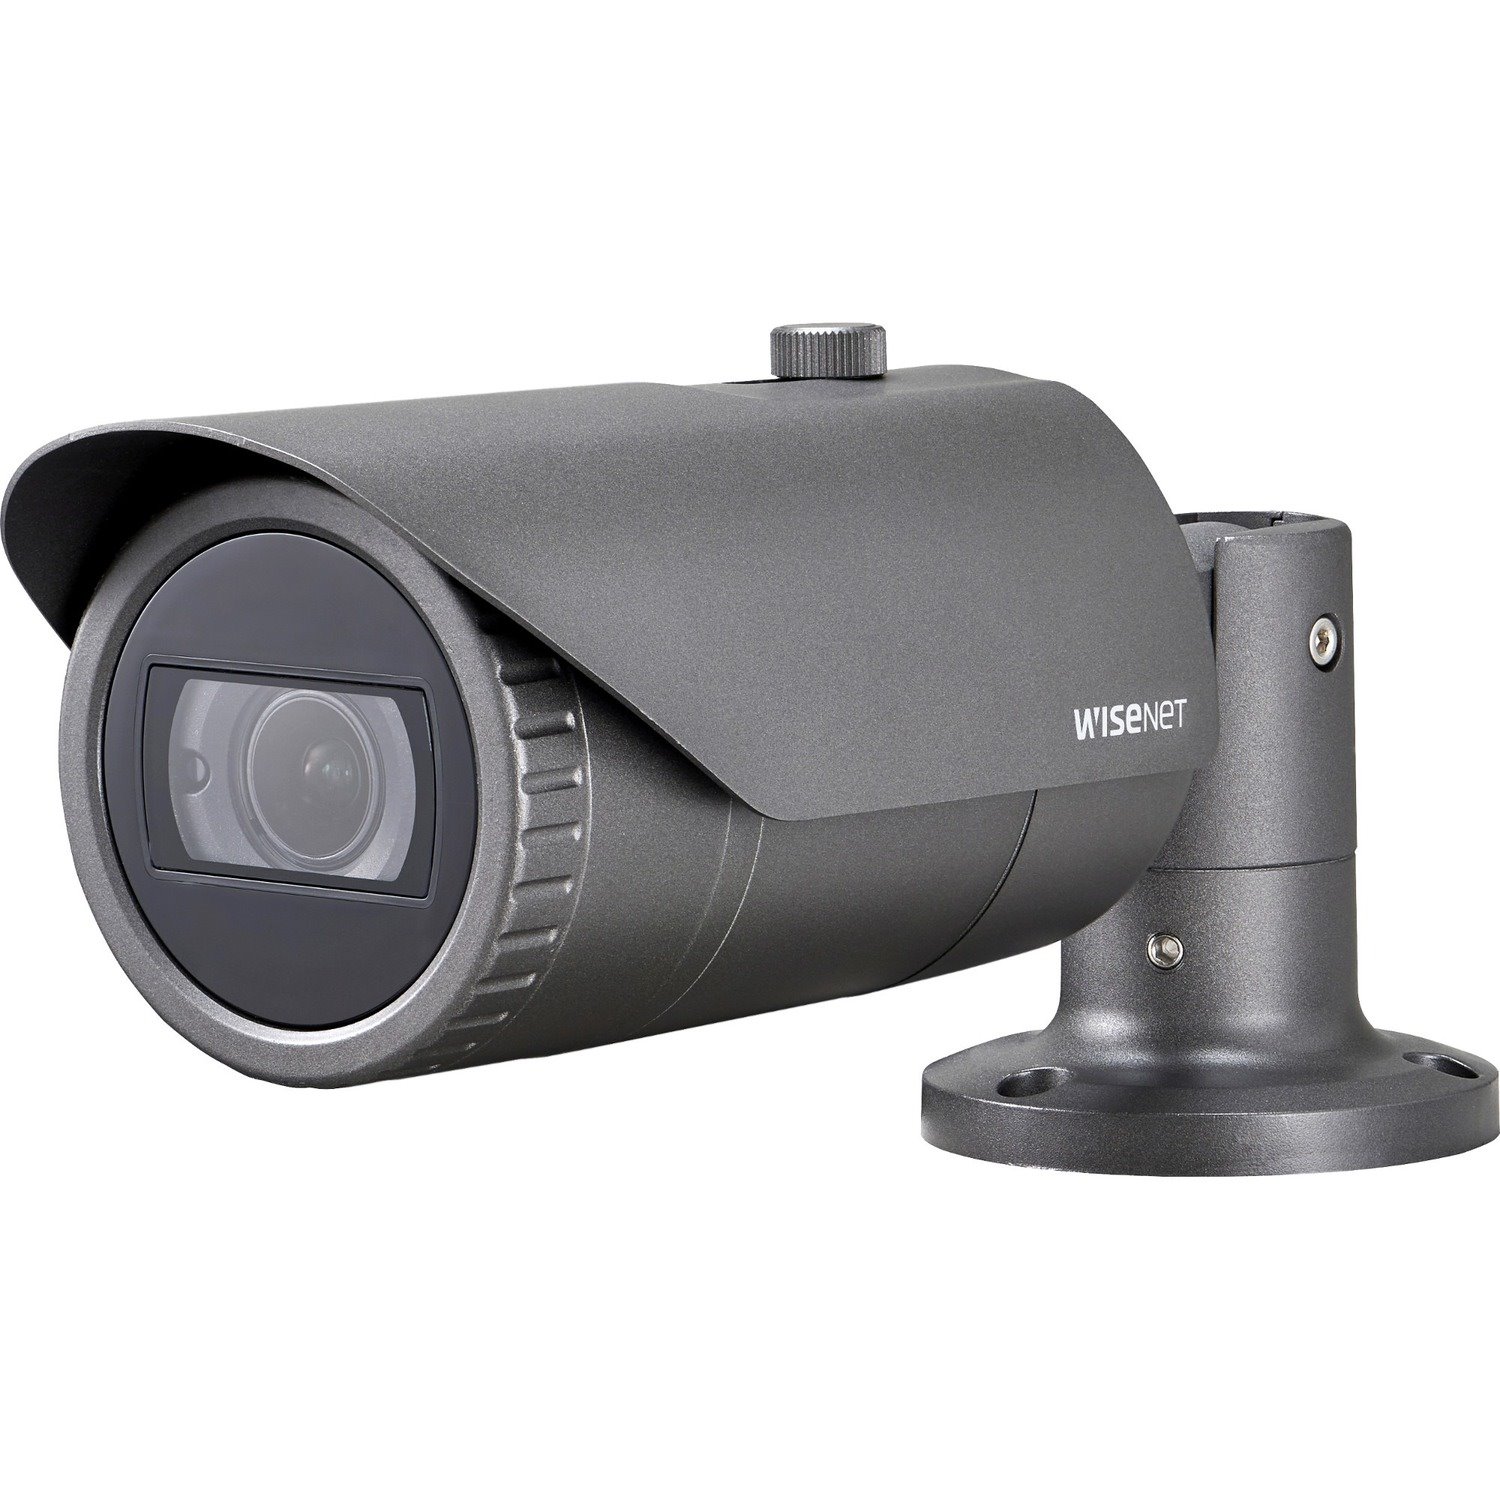 Wisenet HCO-6080R 2 Megapixel Full HD Surveillance Camera - Color - Bullet